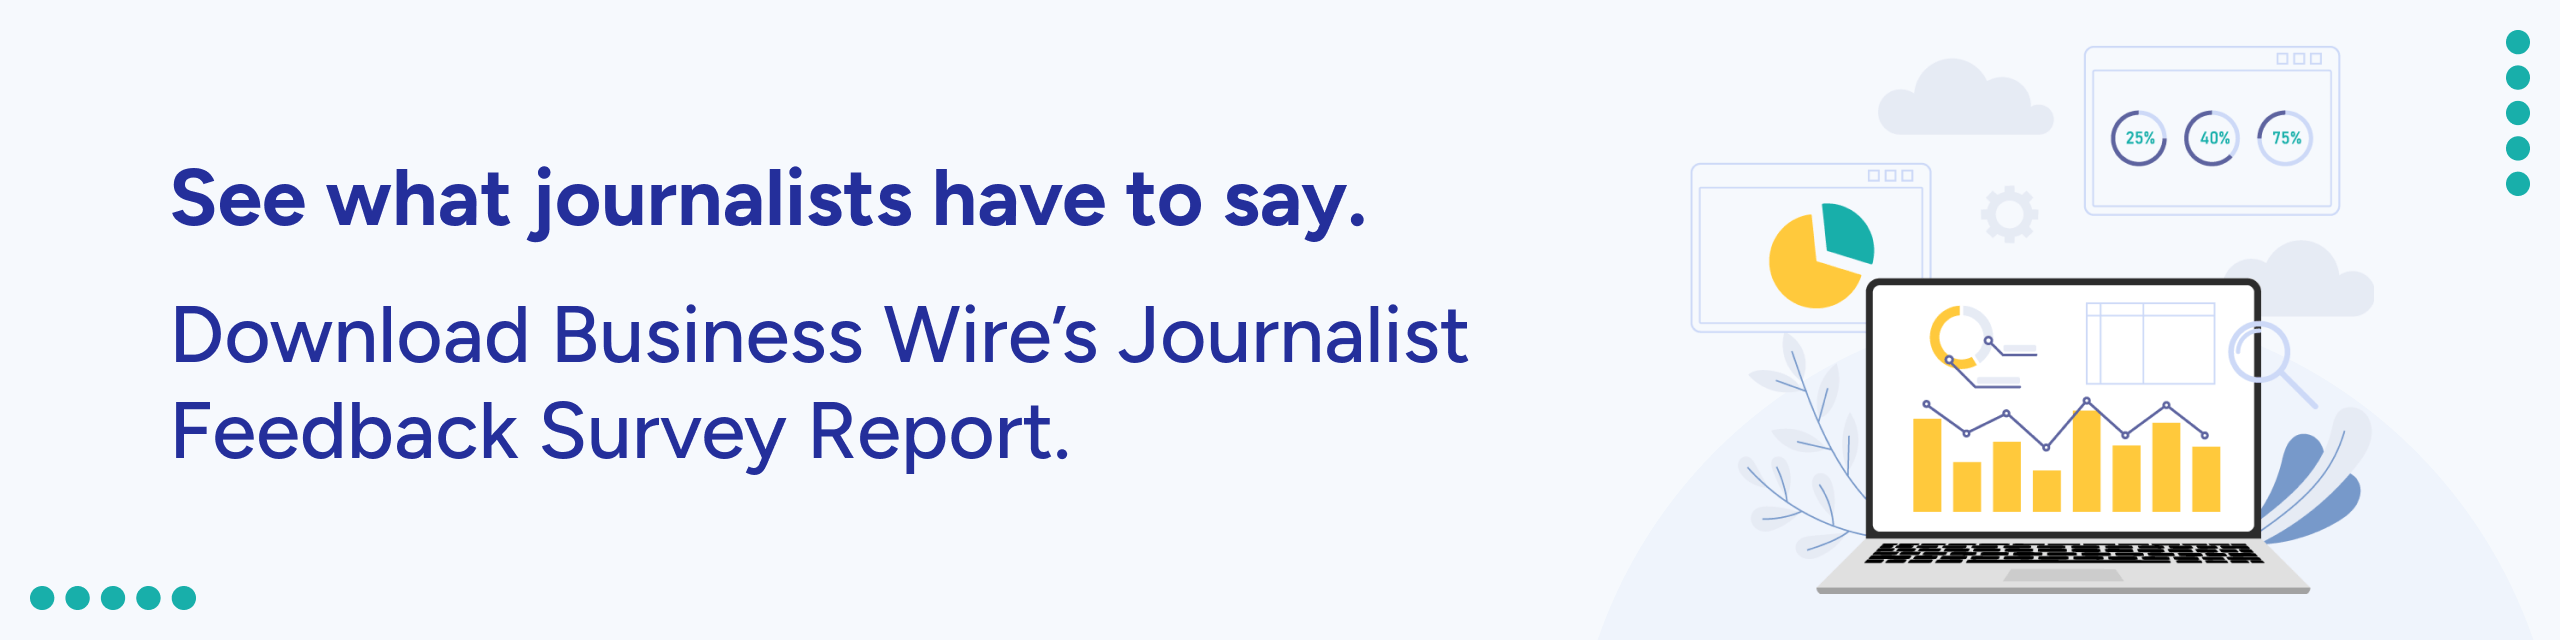 journalist-survey-cta